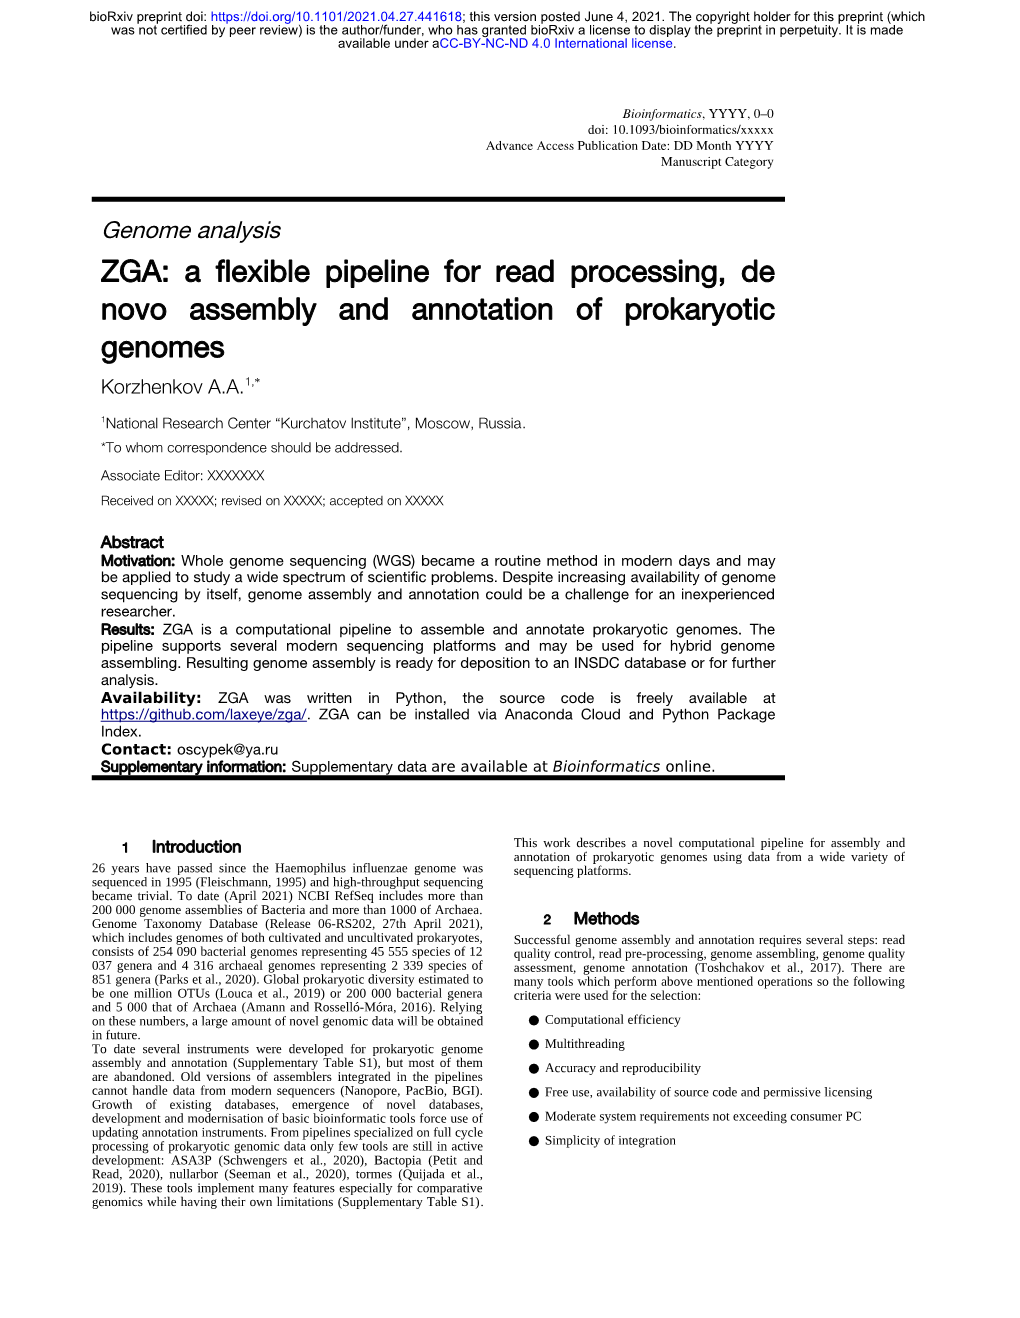 A Flexible Pipeline for Read Processing, De Novo Assembly and Annotation of Prokaryotic Genomes Korzhenkov A.A.1,*